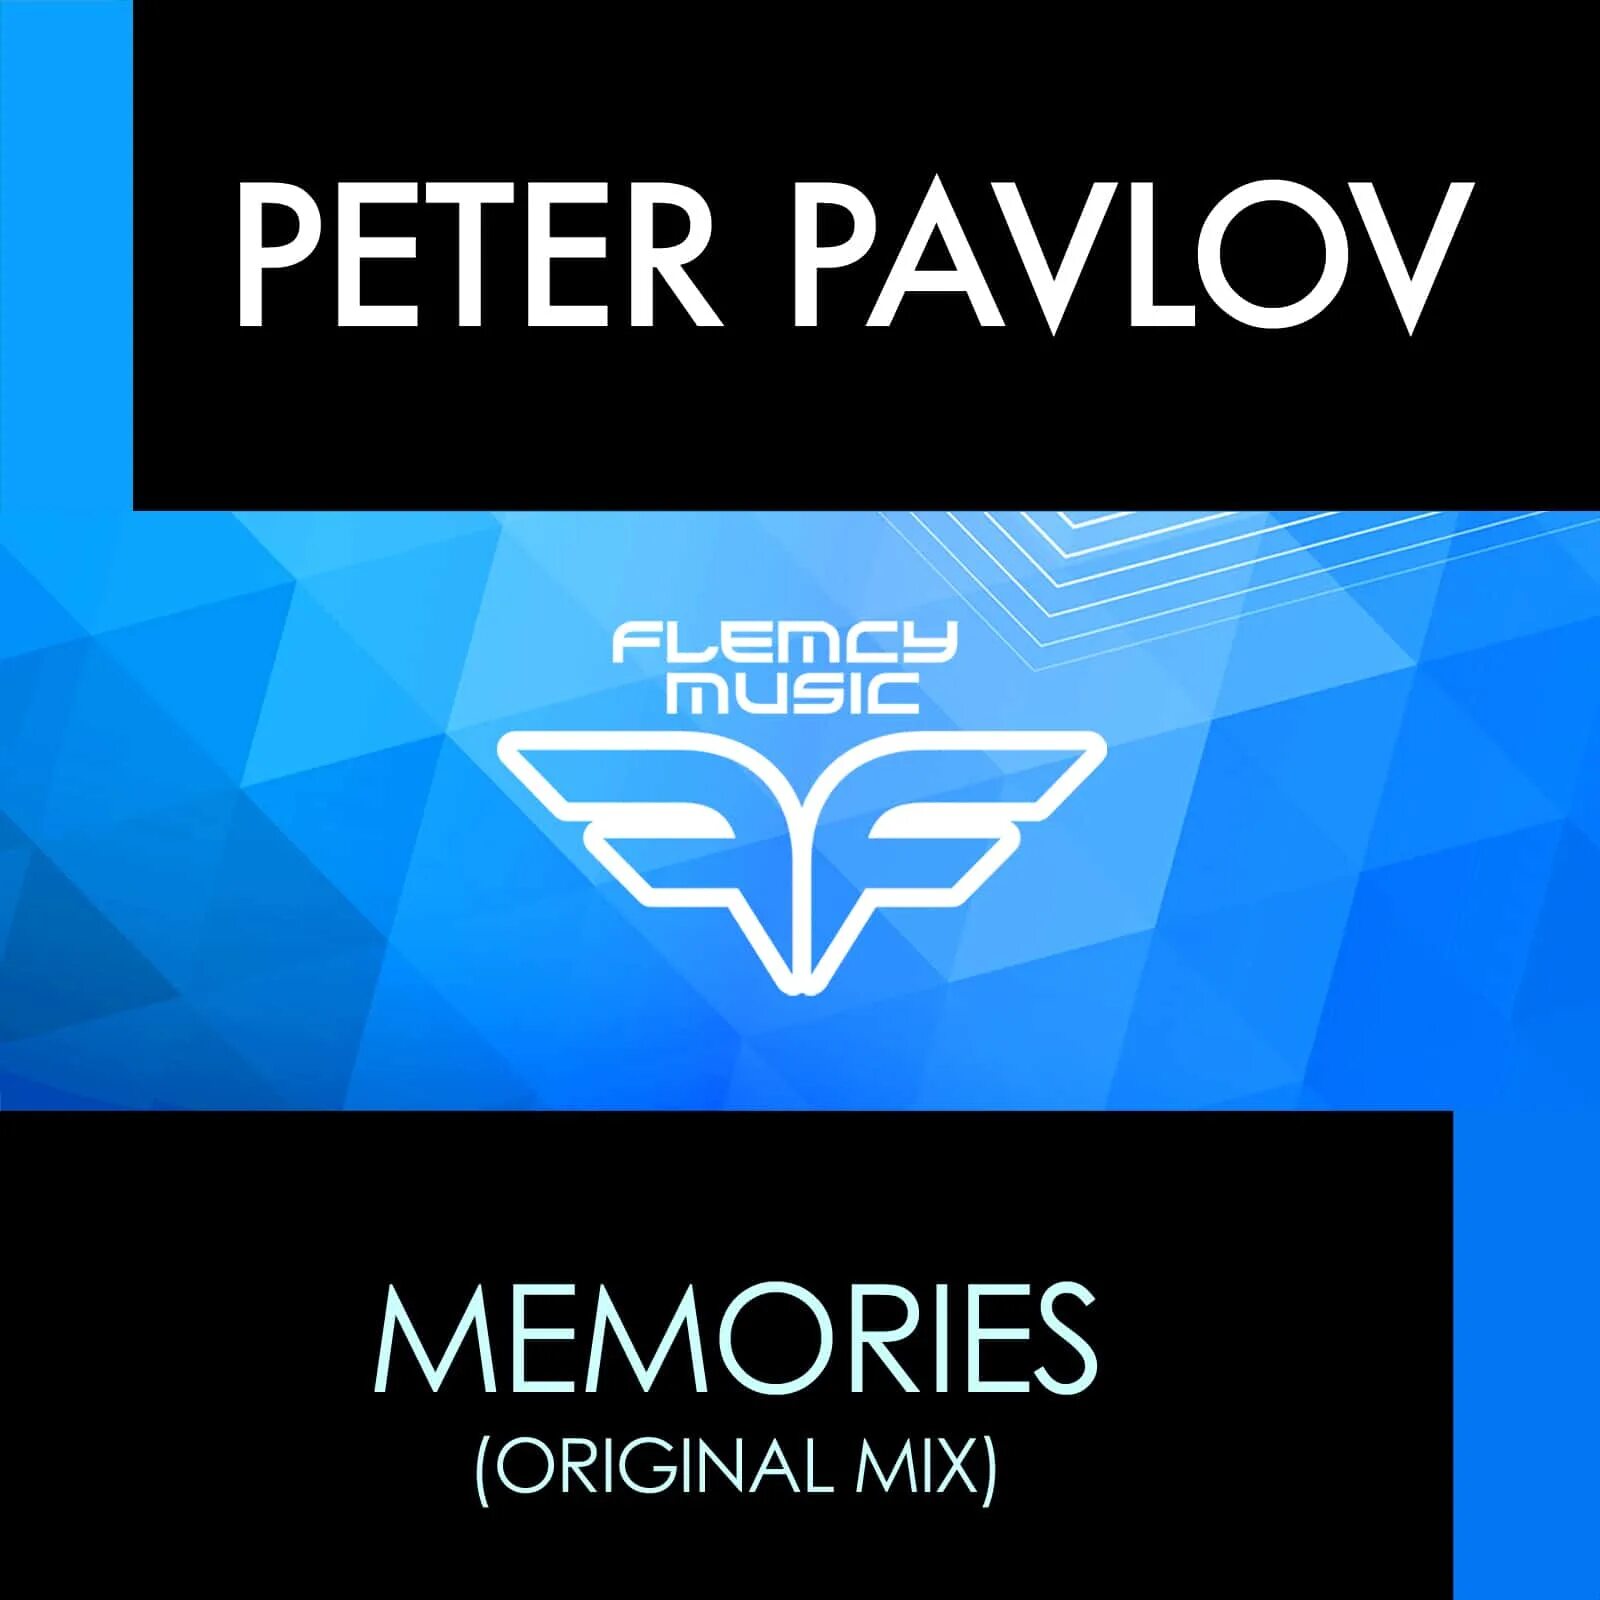 Оригинал Memories. Pavlov soundcloud. Ceas - Memories (Original Mix). Wallem харизма ramirez pavlov remix